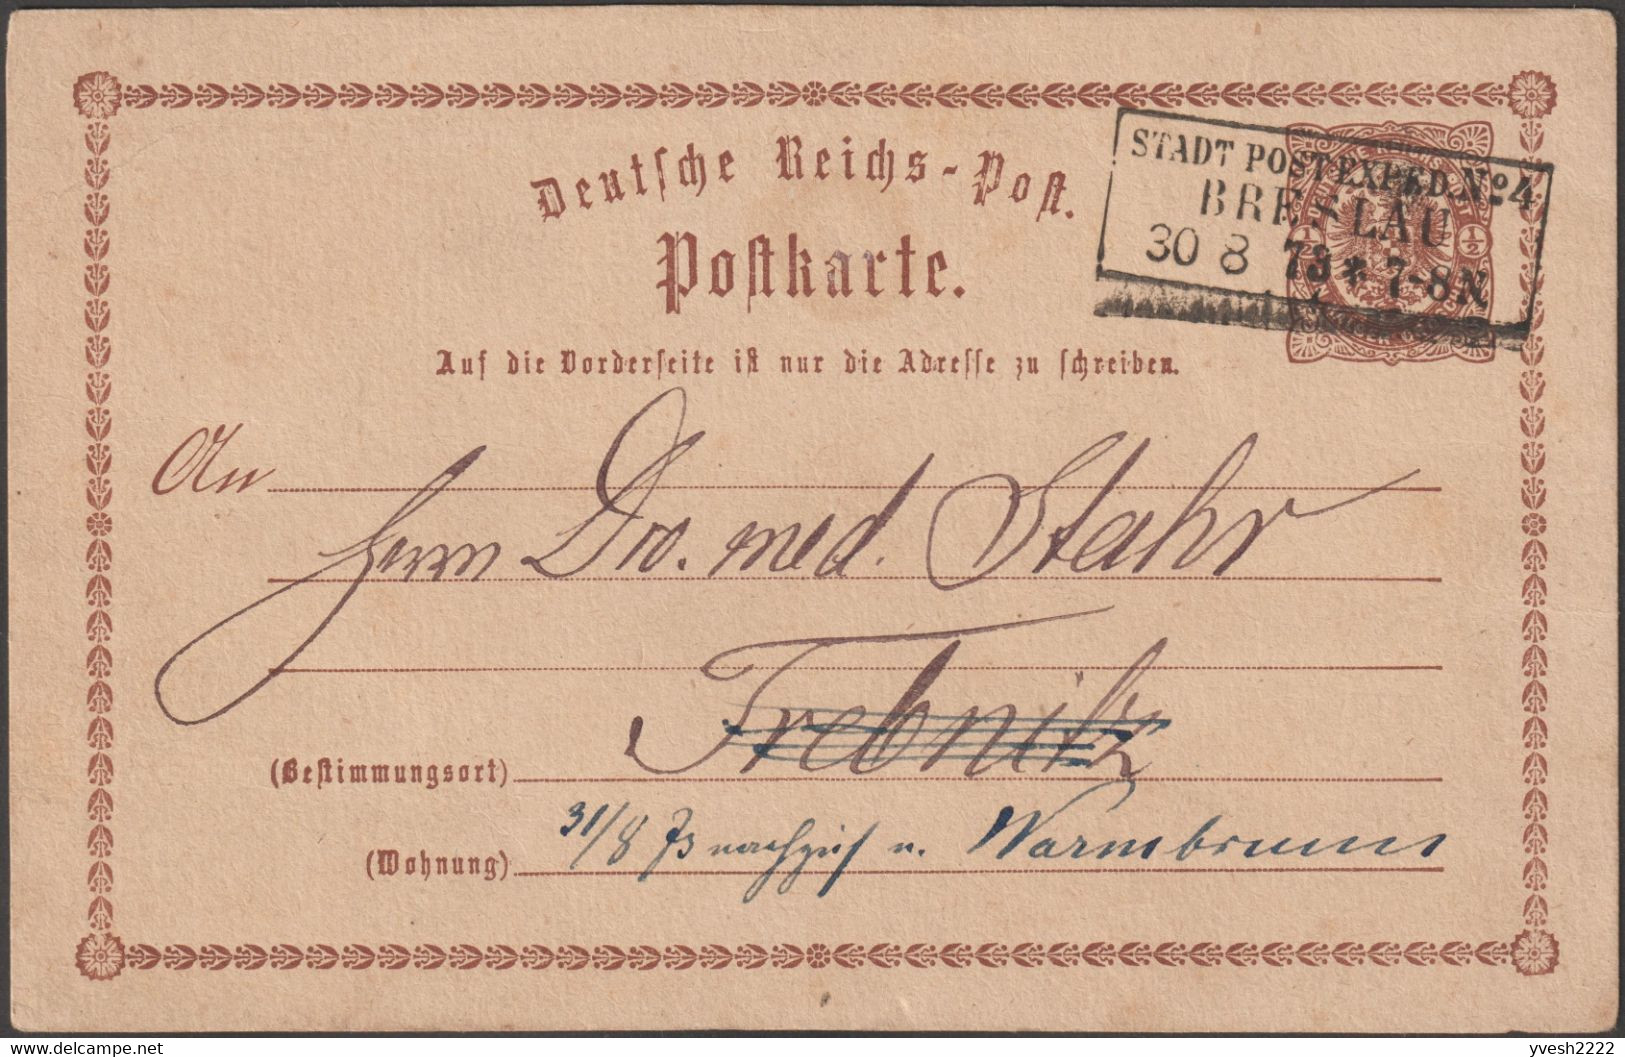 Pologne / Allemagne 1873. Entier Postal Oblitéré Stadt Post Exped. N° 4 - Breslau 30 8 73  7-8 N  Wrocław - Frankeermachines (EMA)